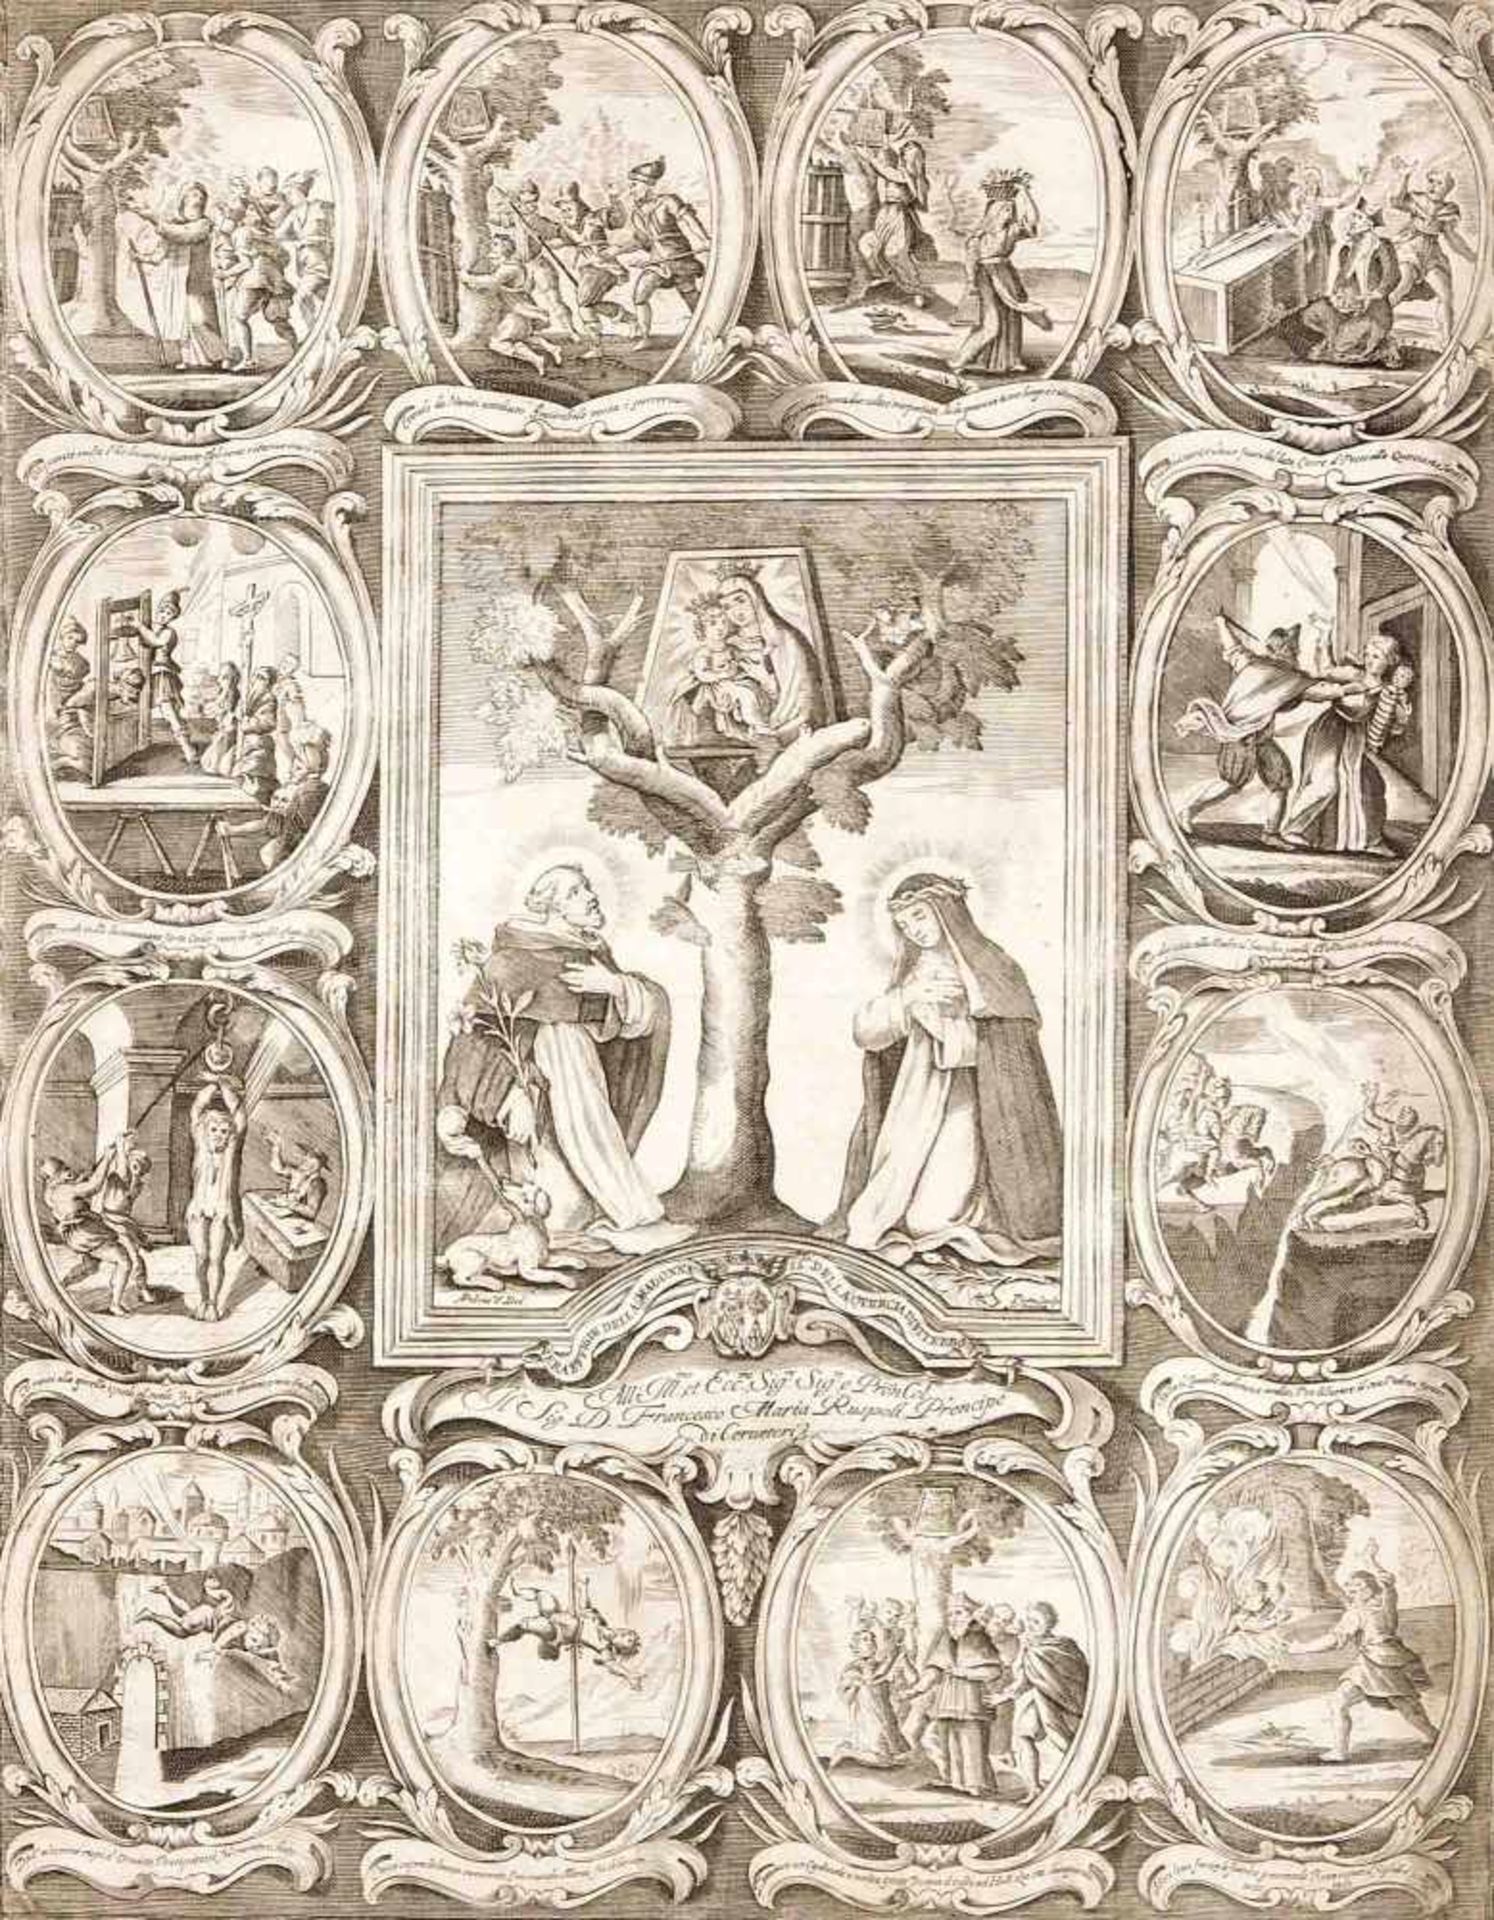 Italienisches Gnadenbild um 1700, Portio nach A. Palina, "Santa Maria della Quercia"sogenannte